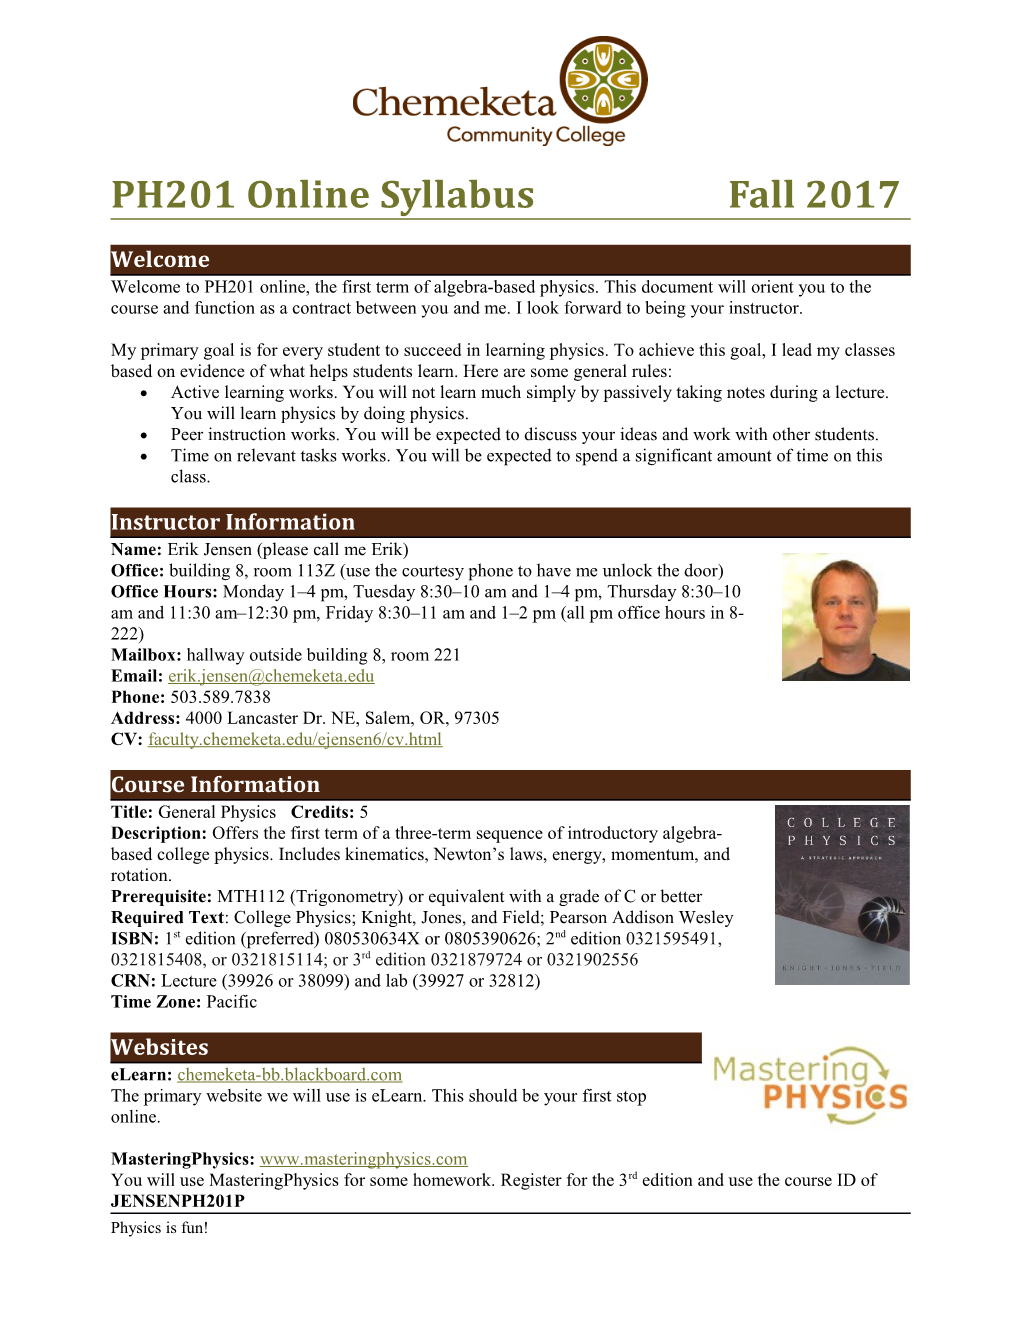 PH 201 General Physics Fall 2001